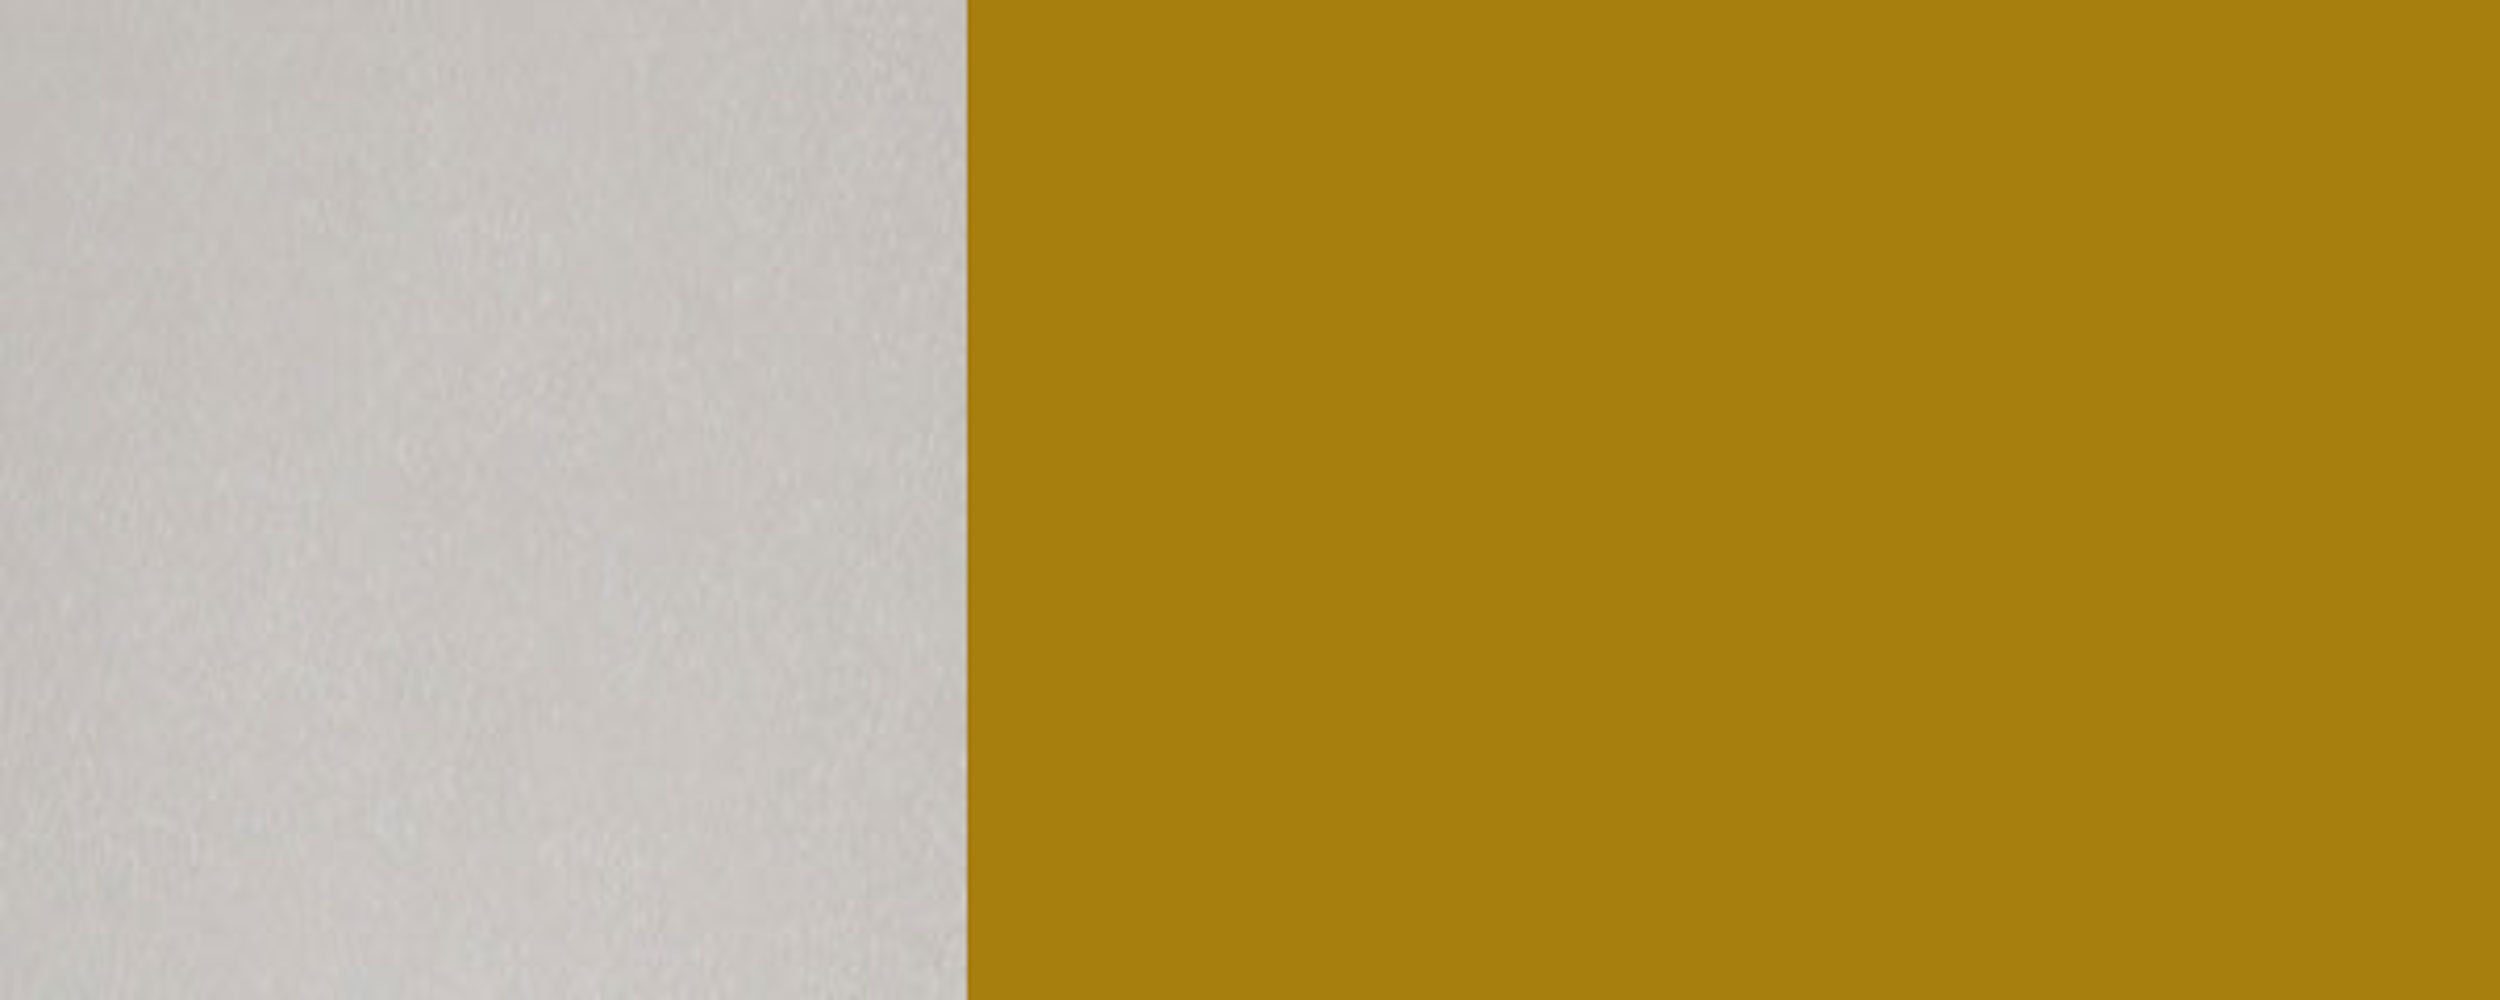 90cm 2-teilige RAL 1027 Hochfaltklappe & Front- matt (Rimini) Klapphängeschrank Glaseinsatz Feldmann-Wohnen Rimini wählbar currygelb Korpusfarbe